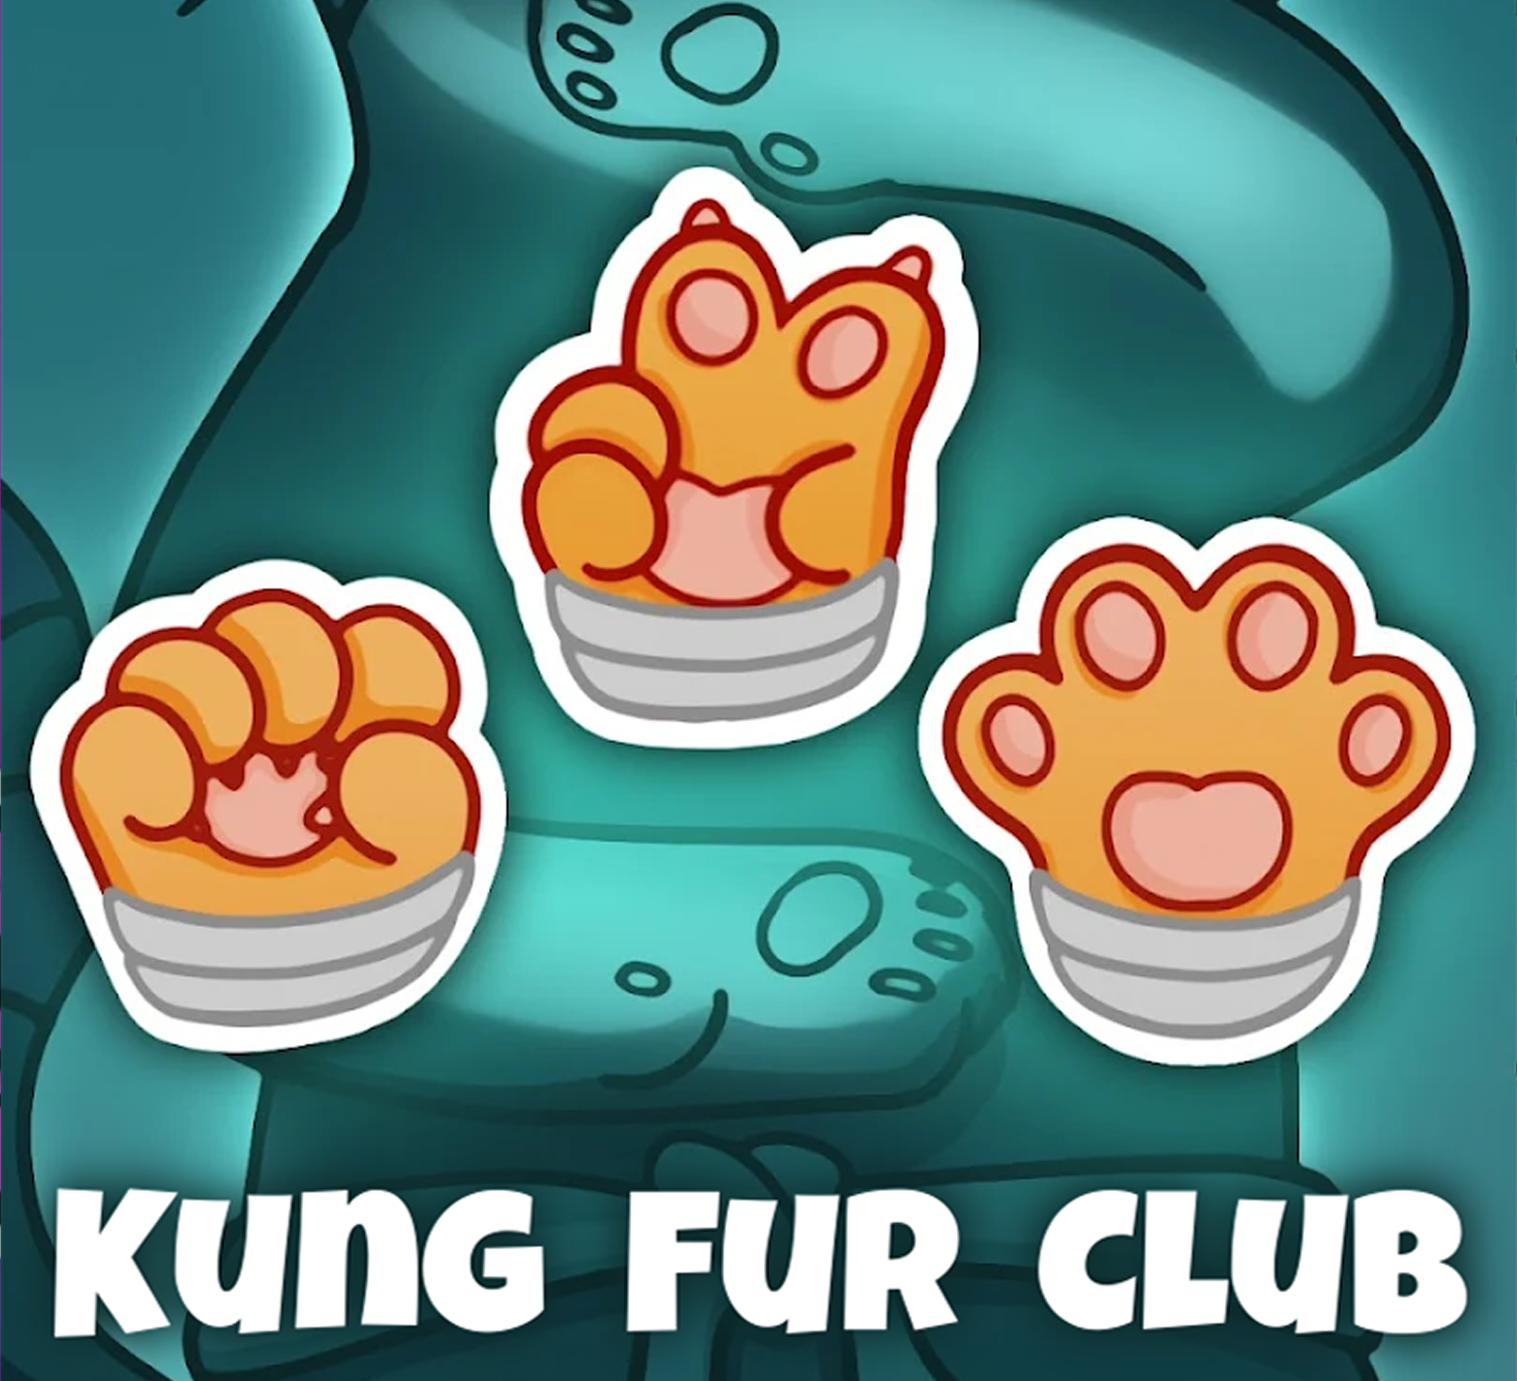 Kung Fur Club